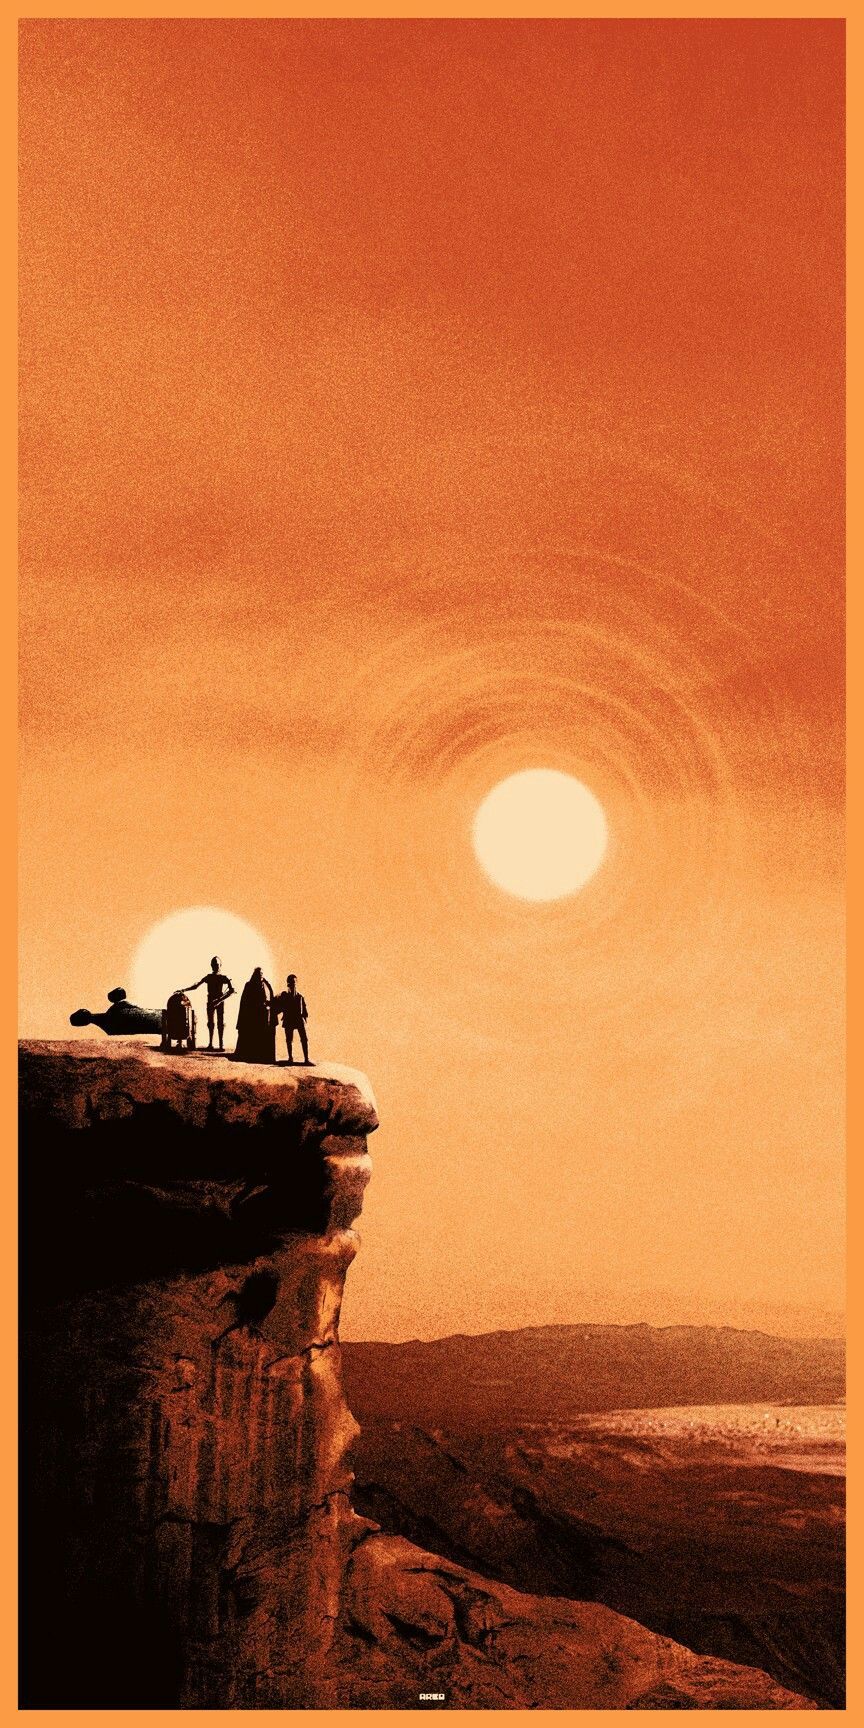 Mos Eisley. Star wars illustration, Star wars painting, Star wars poster